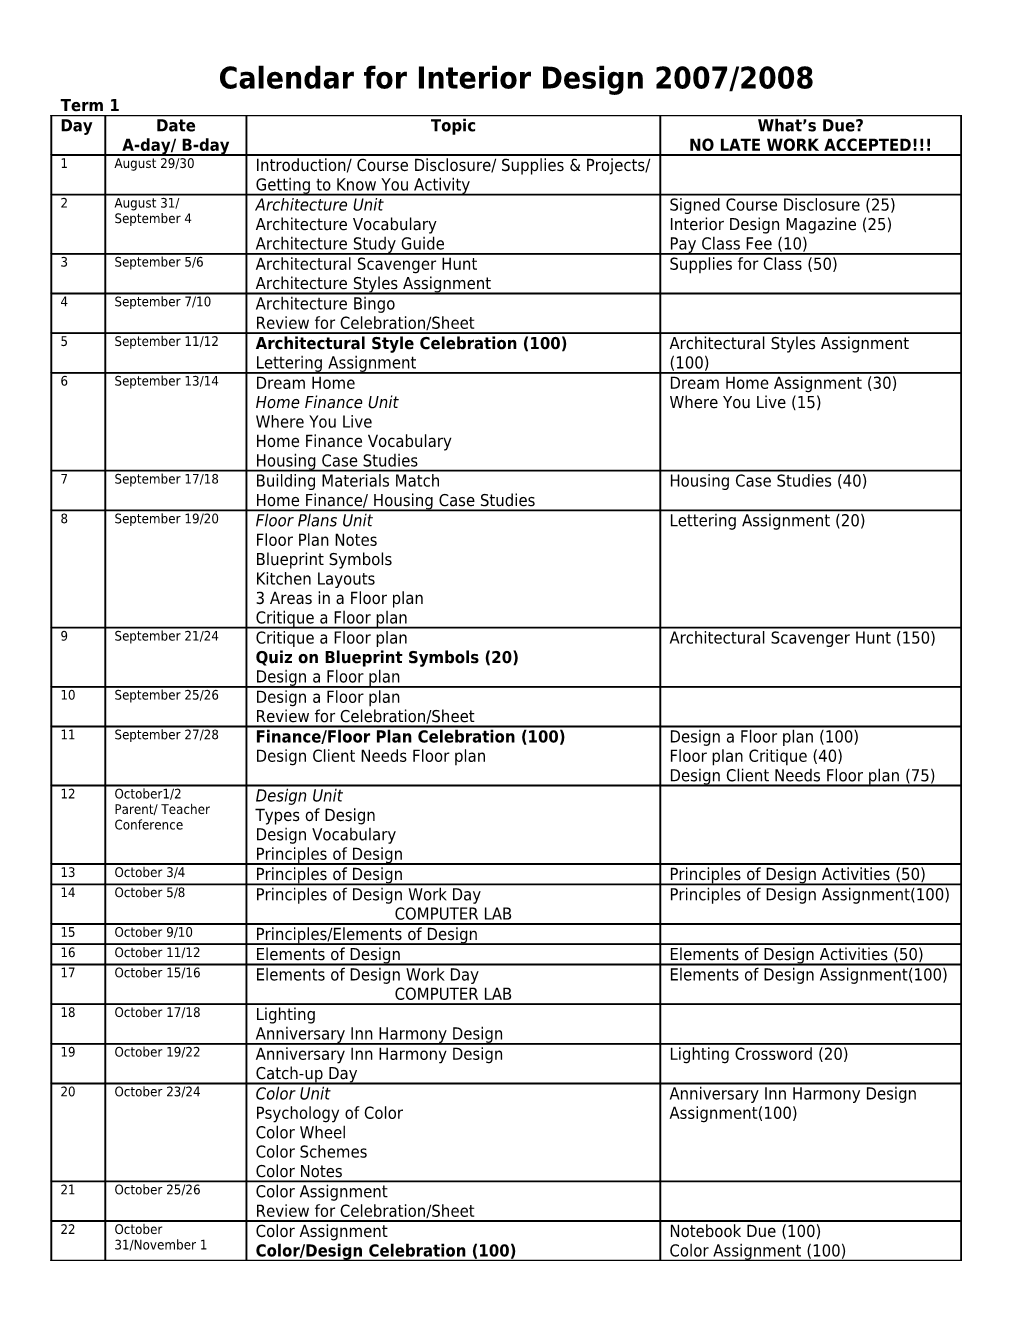 Calendar for Adult Roles 2007